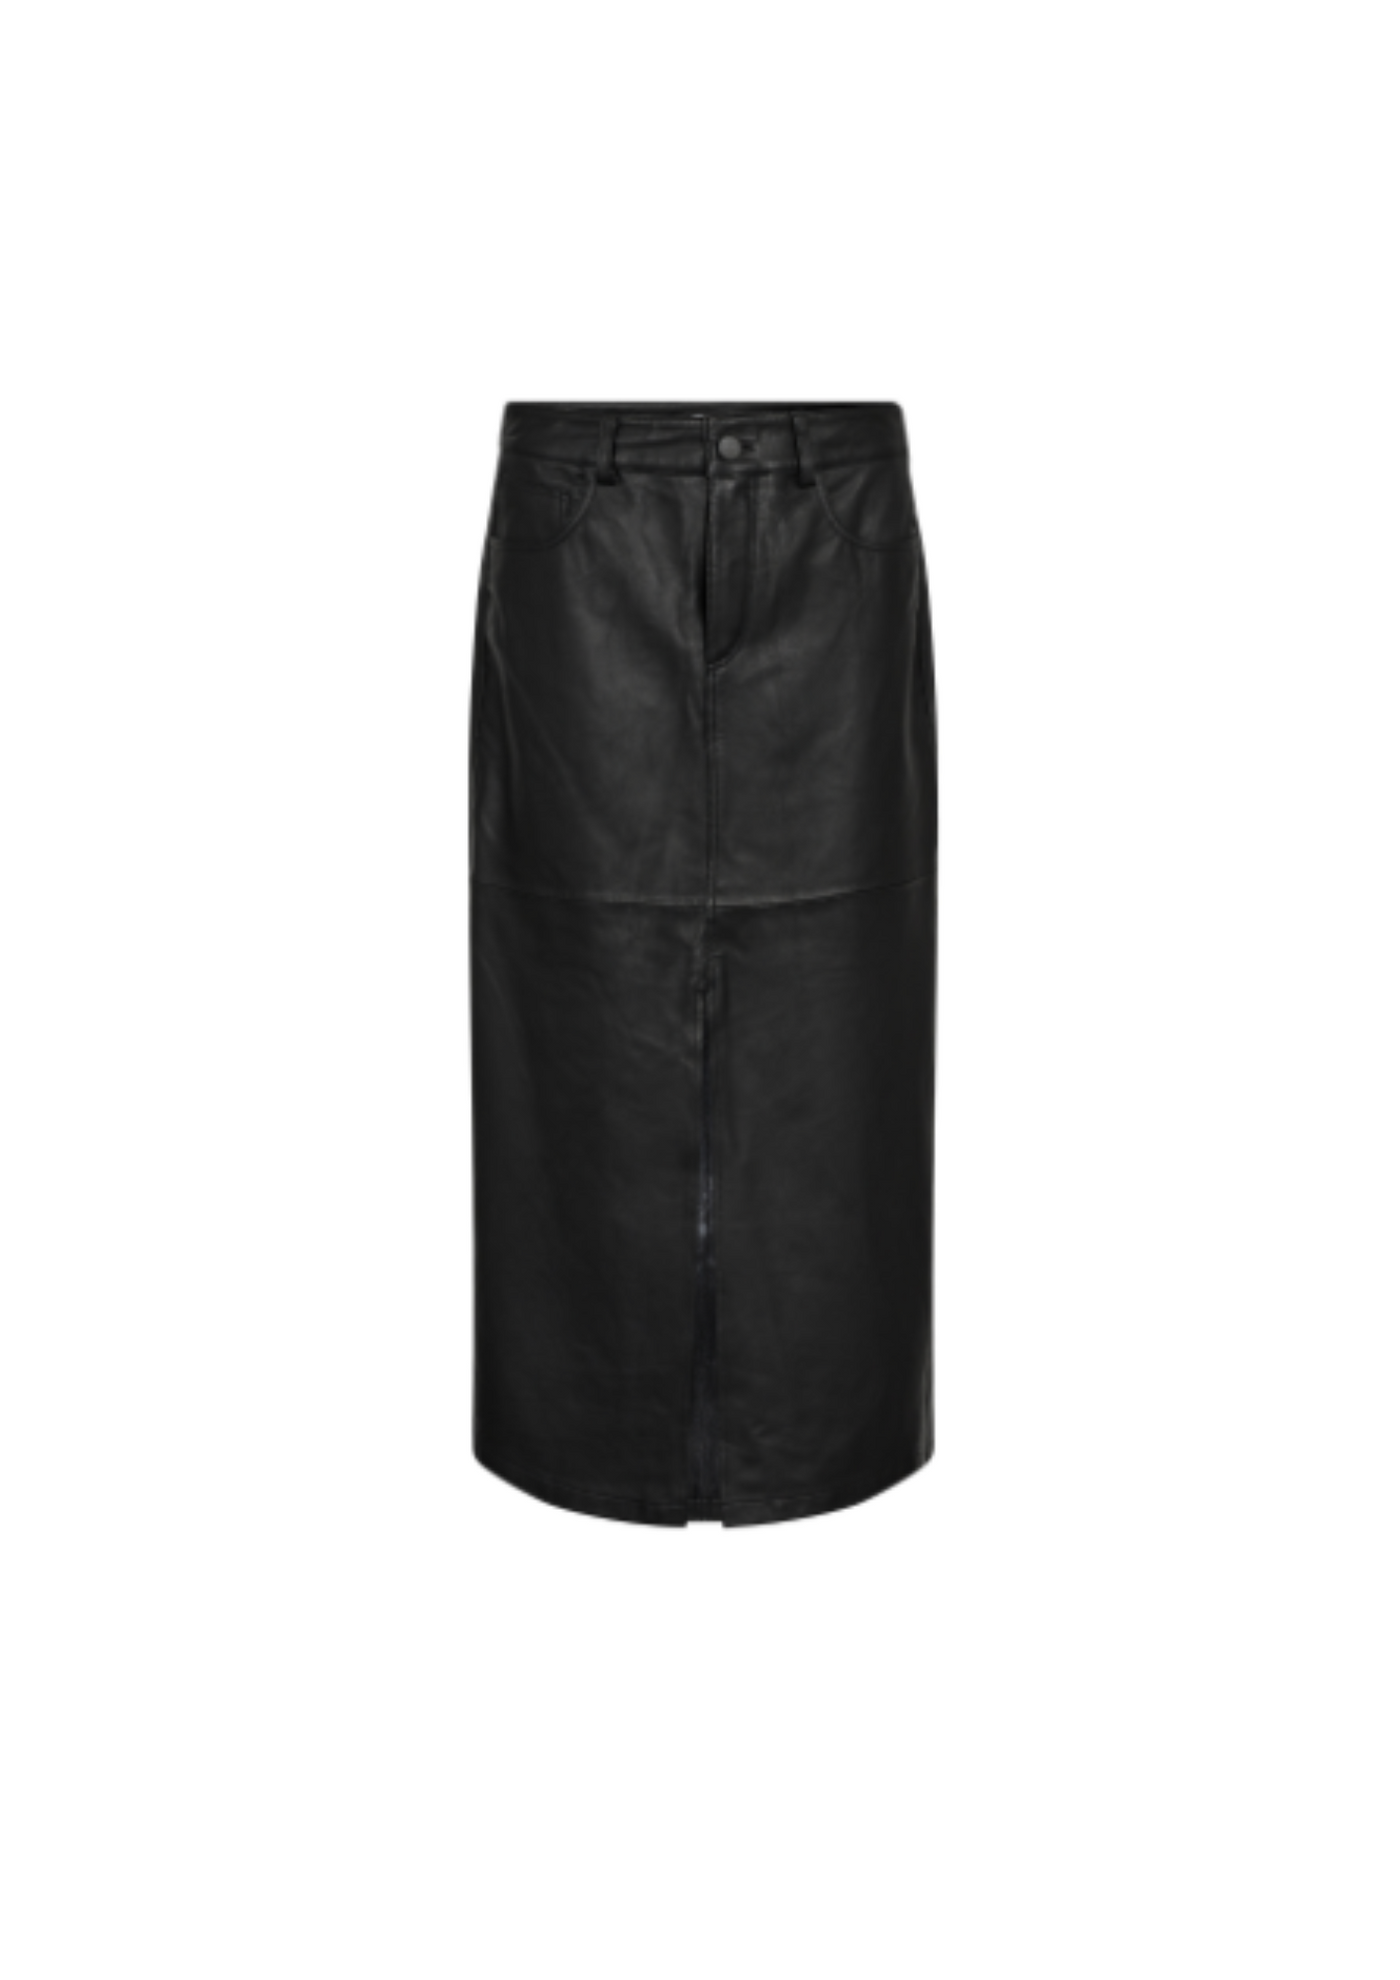 Co' Couture | PhoebeCC Leather Slit Skirt Black